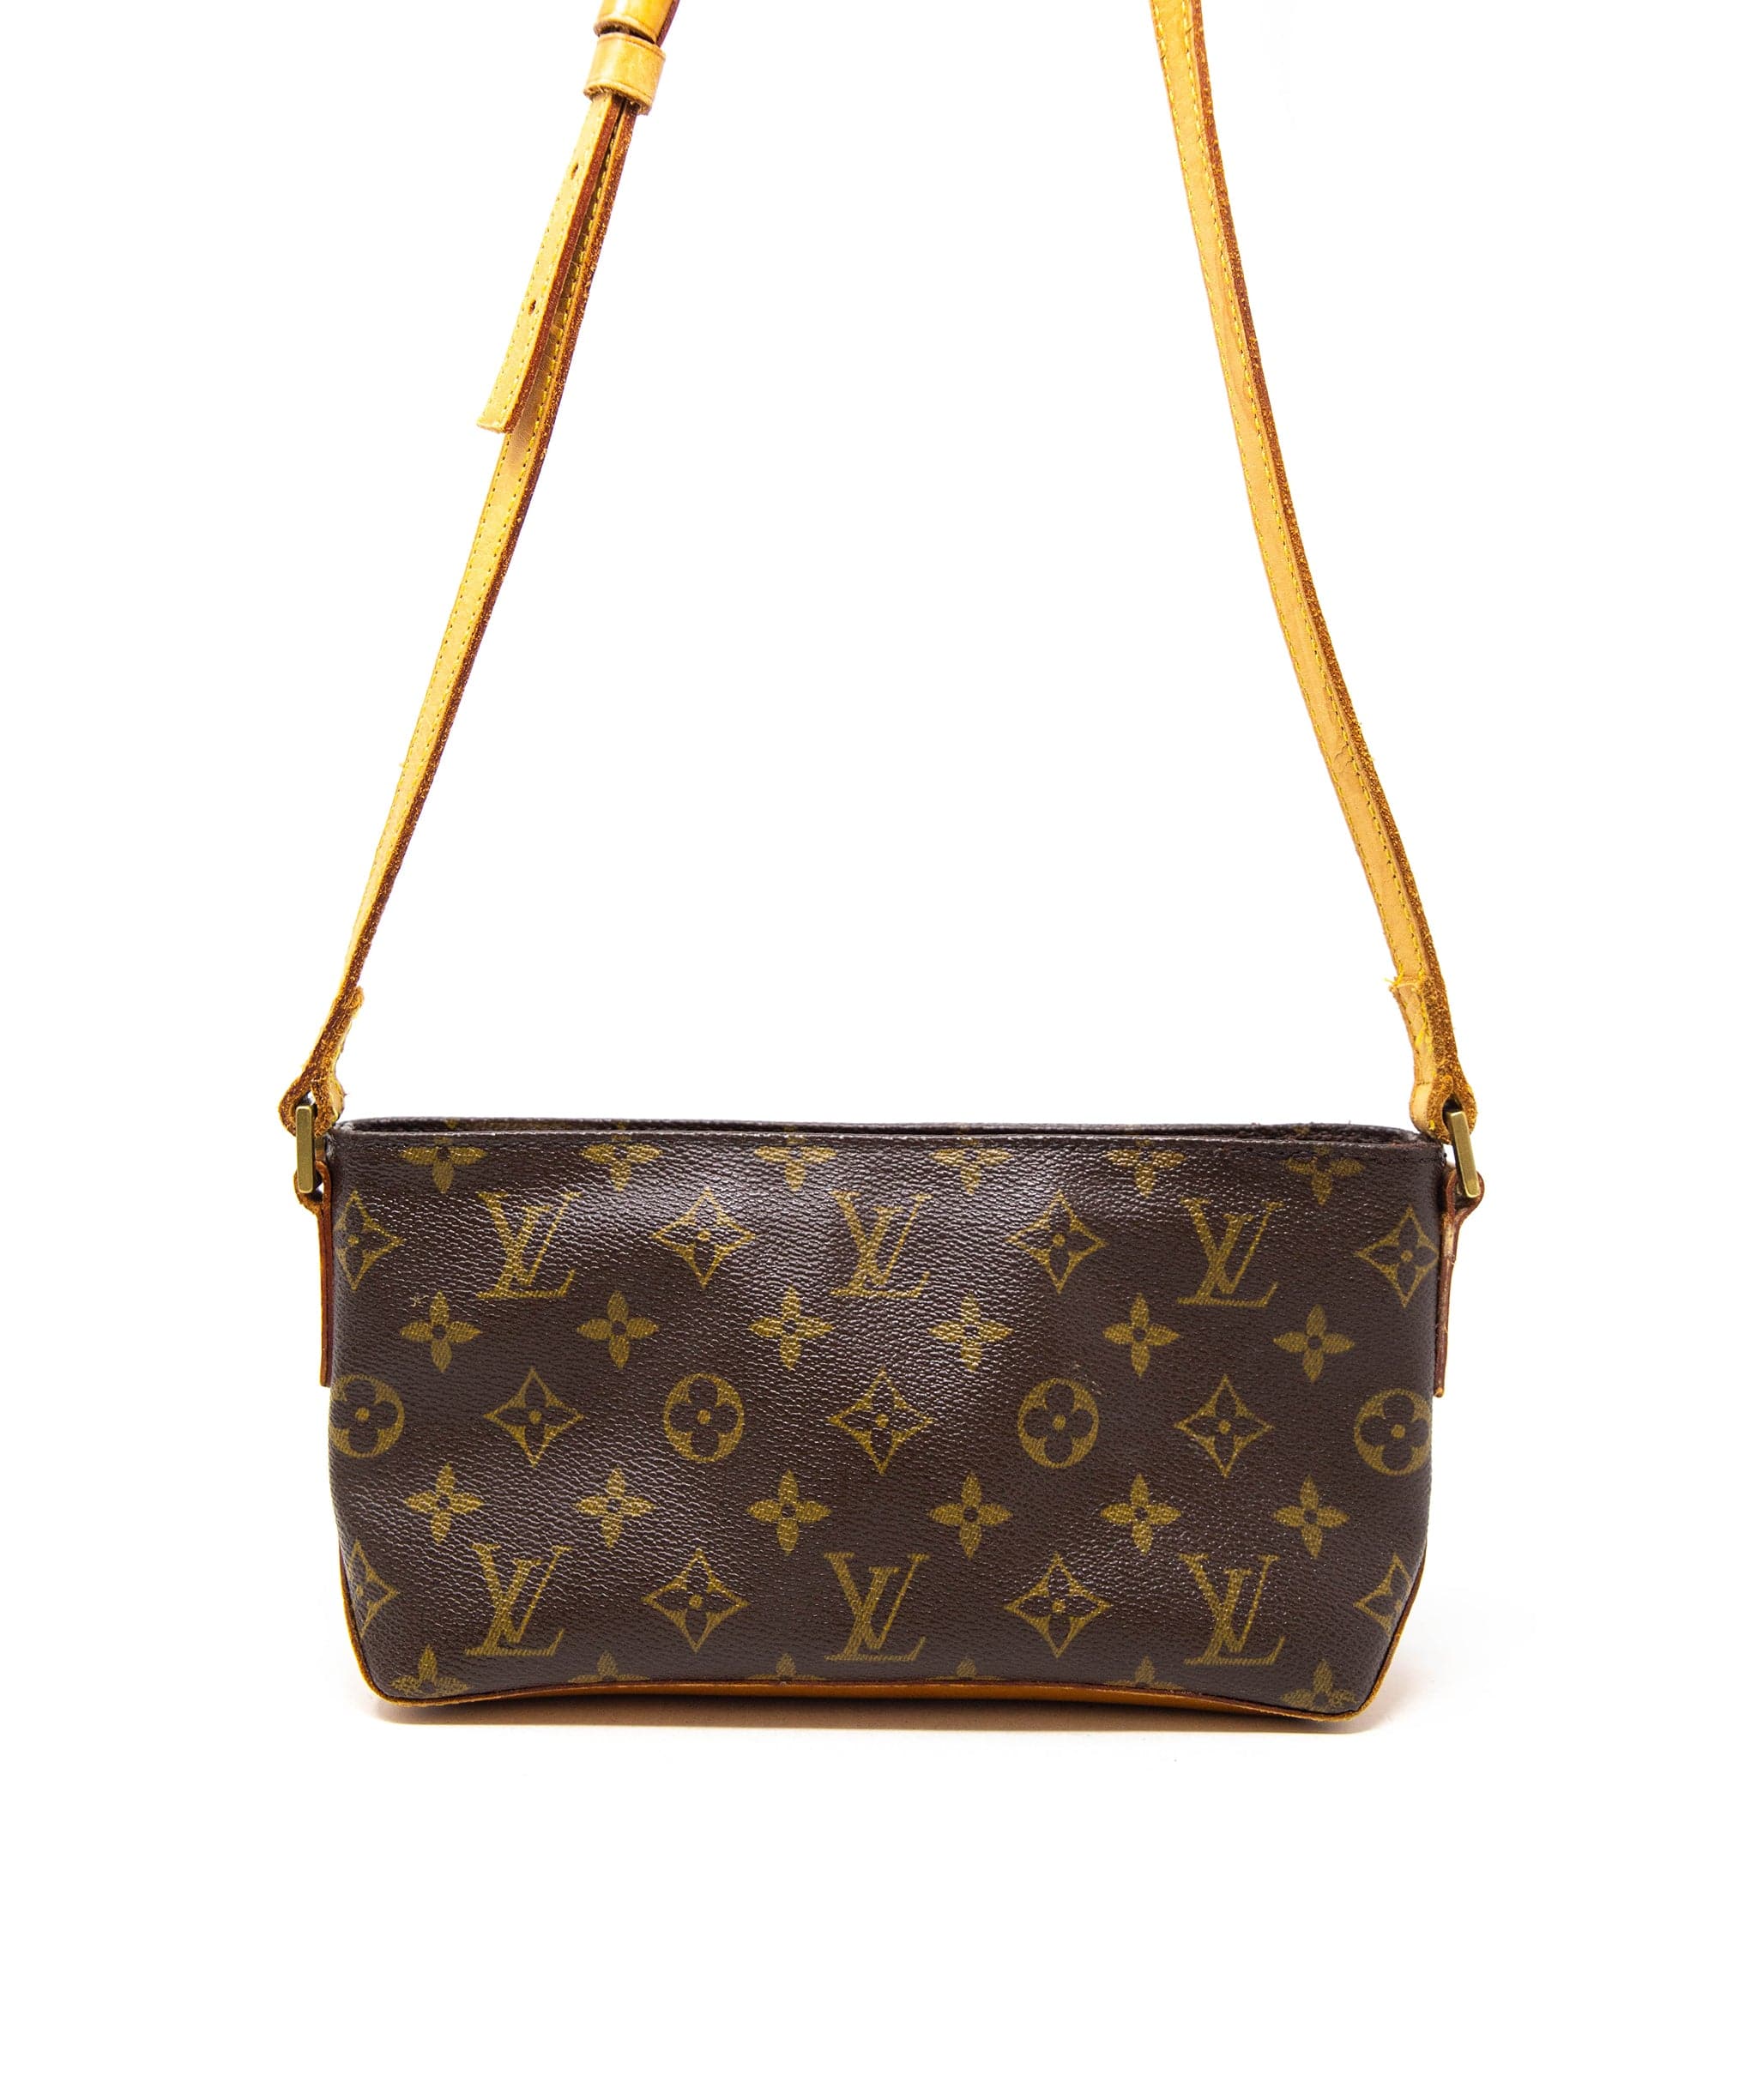 LV Monogram Trotteur Bag with Tan Leather Strap - Handbags & Purses -  Costume & Dressing Accessories